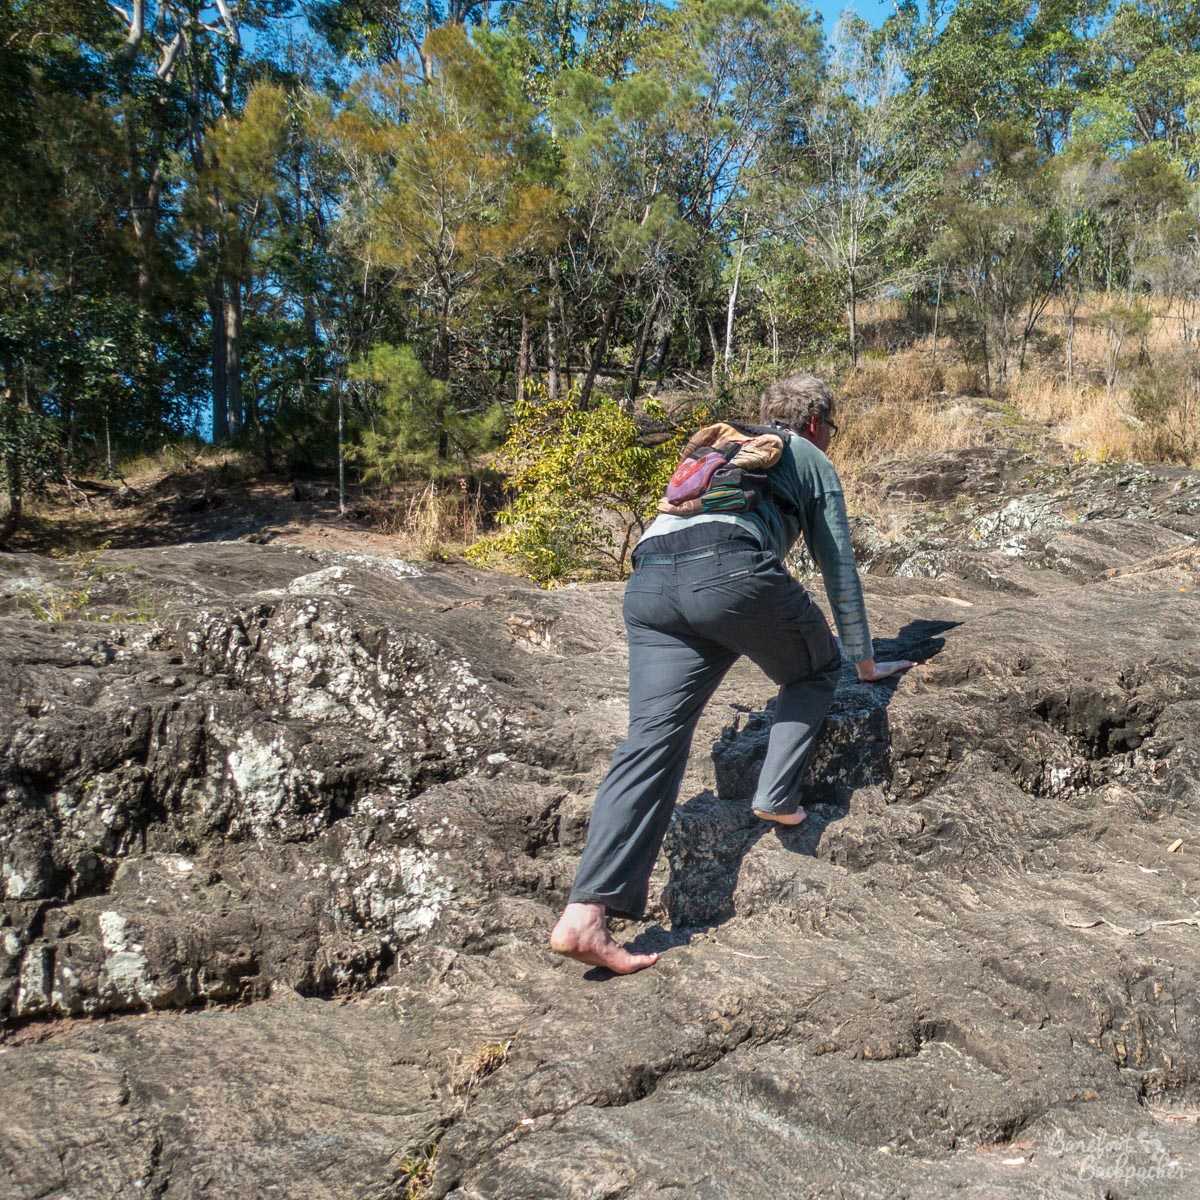 Rock-climbing barefoot, at a waterfall near Nambour, Australia